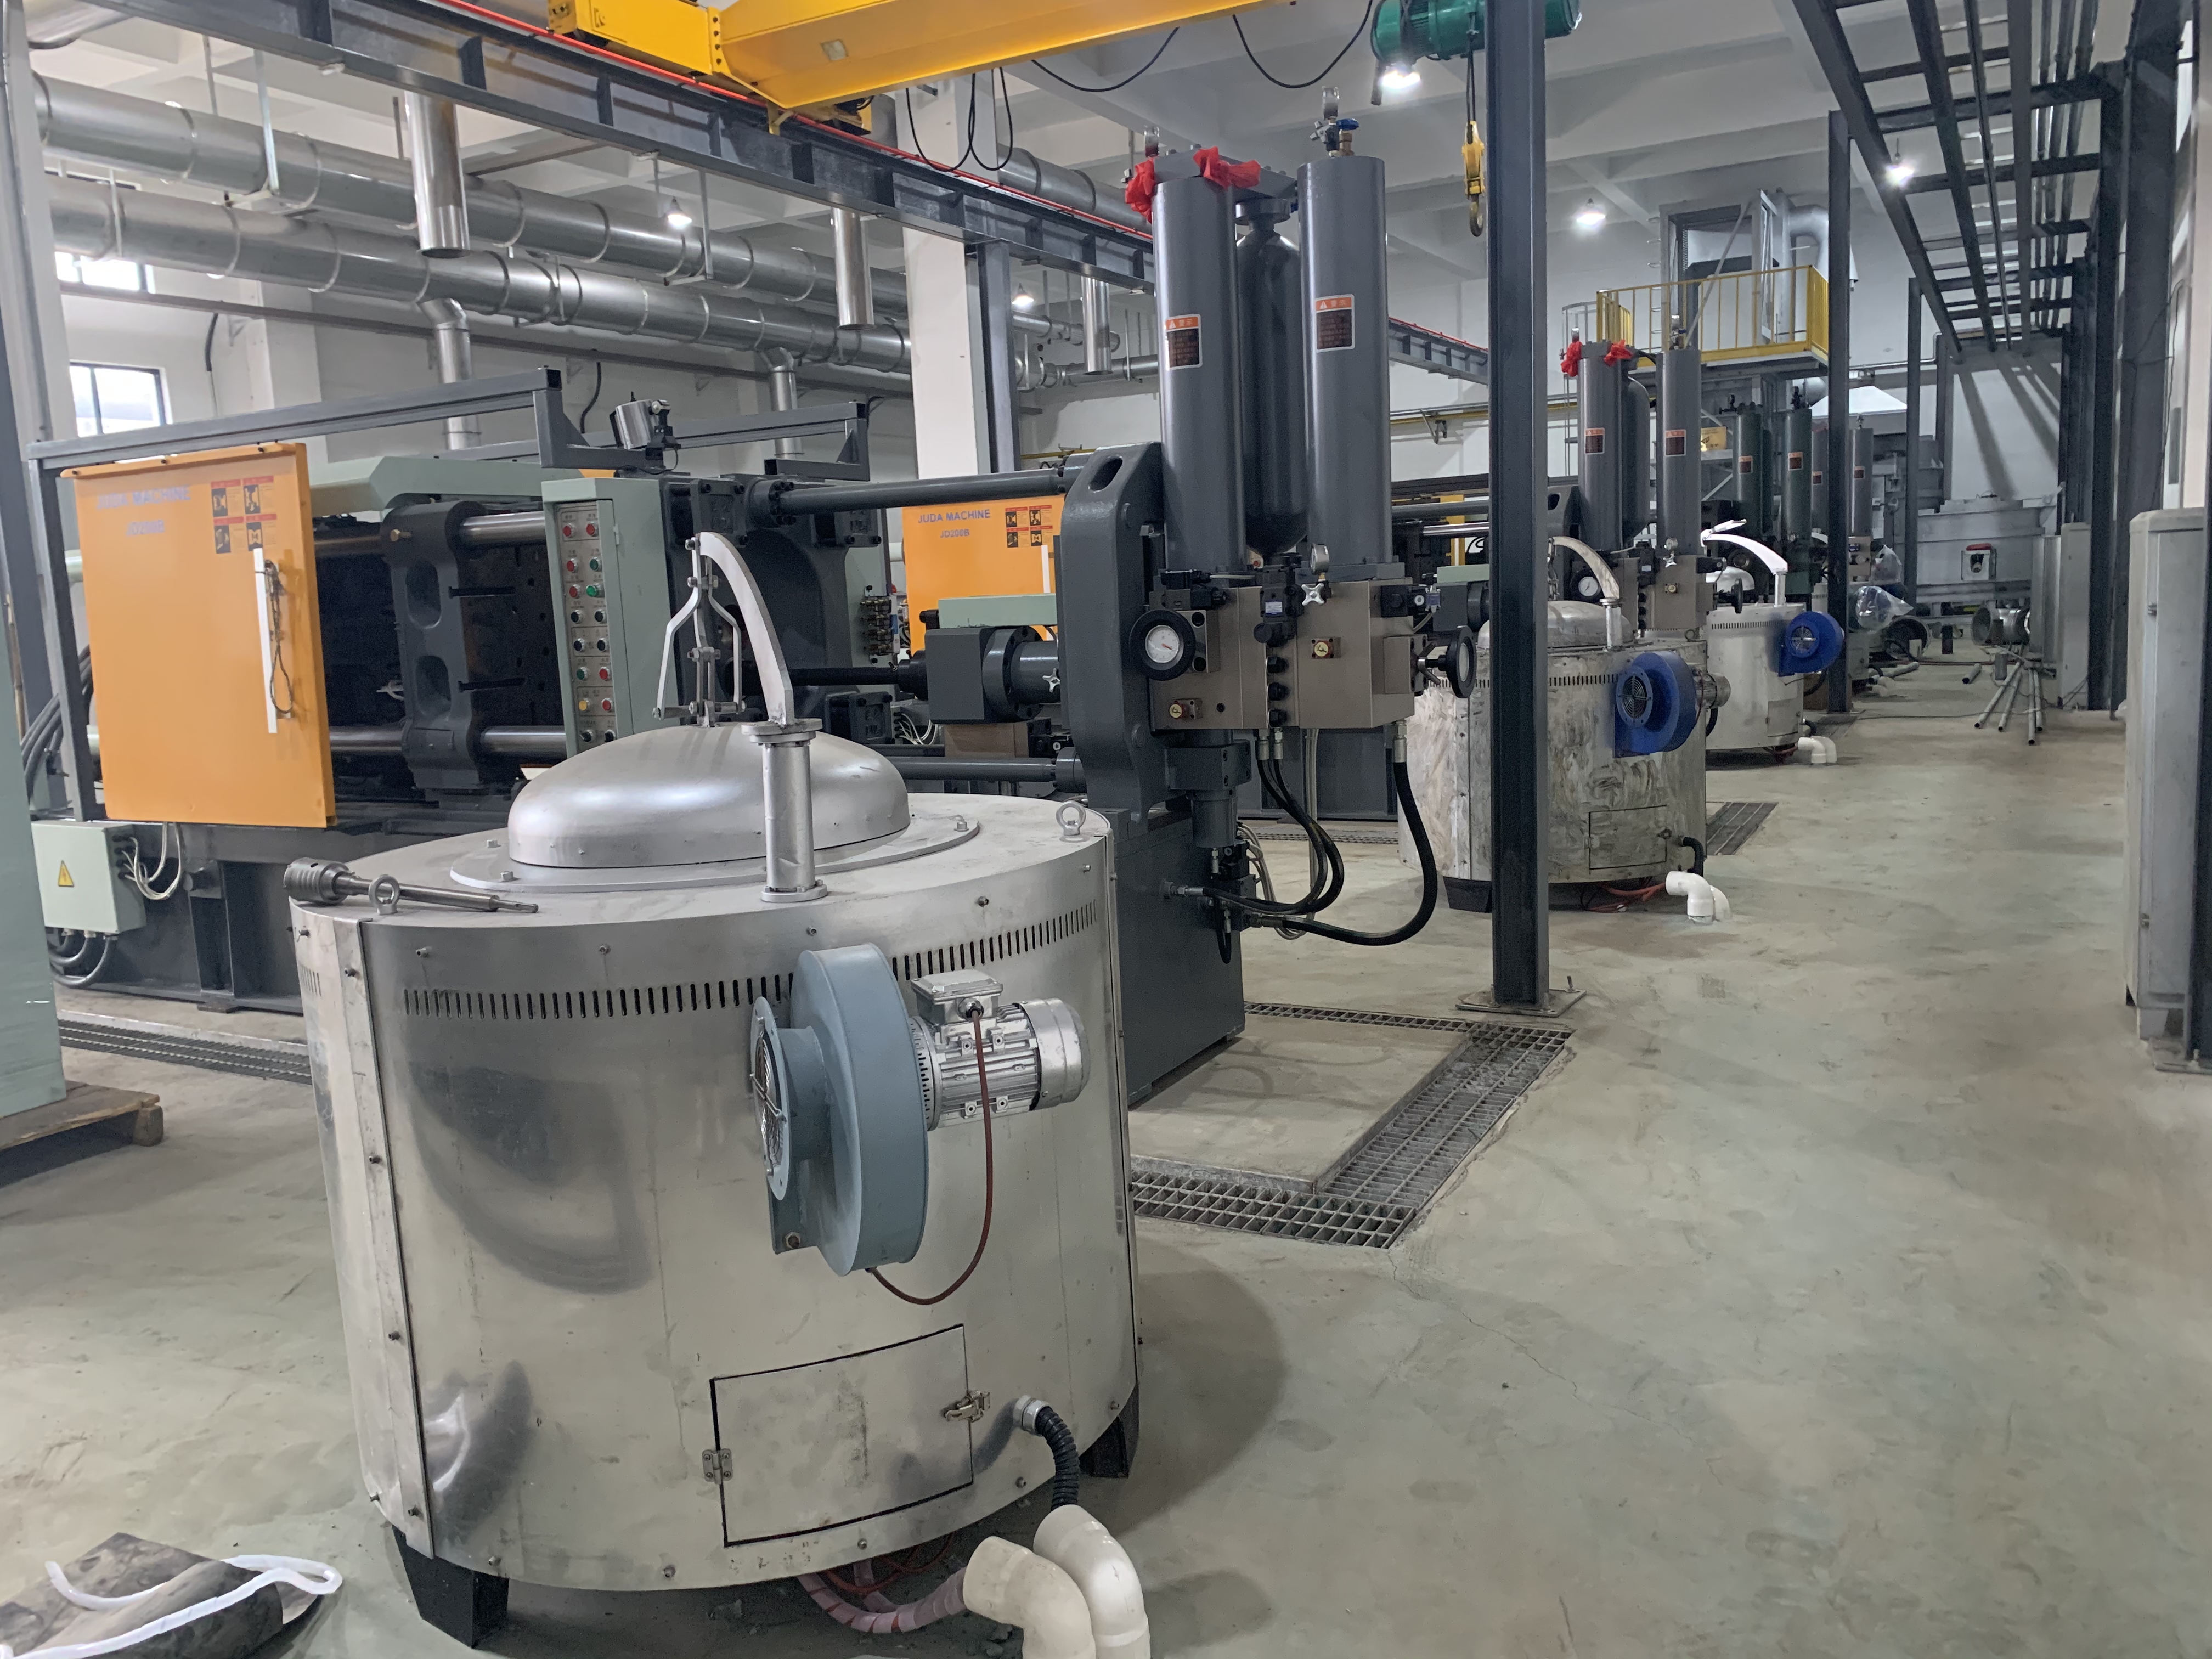 Success of RONGDA’s Induction Furnace Melting Process Sparks Market Interest